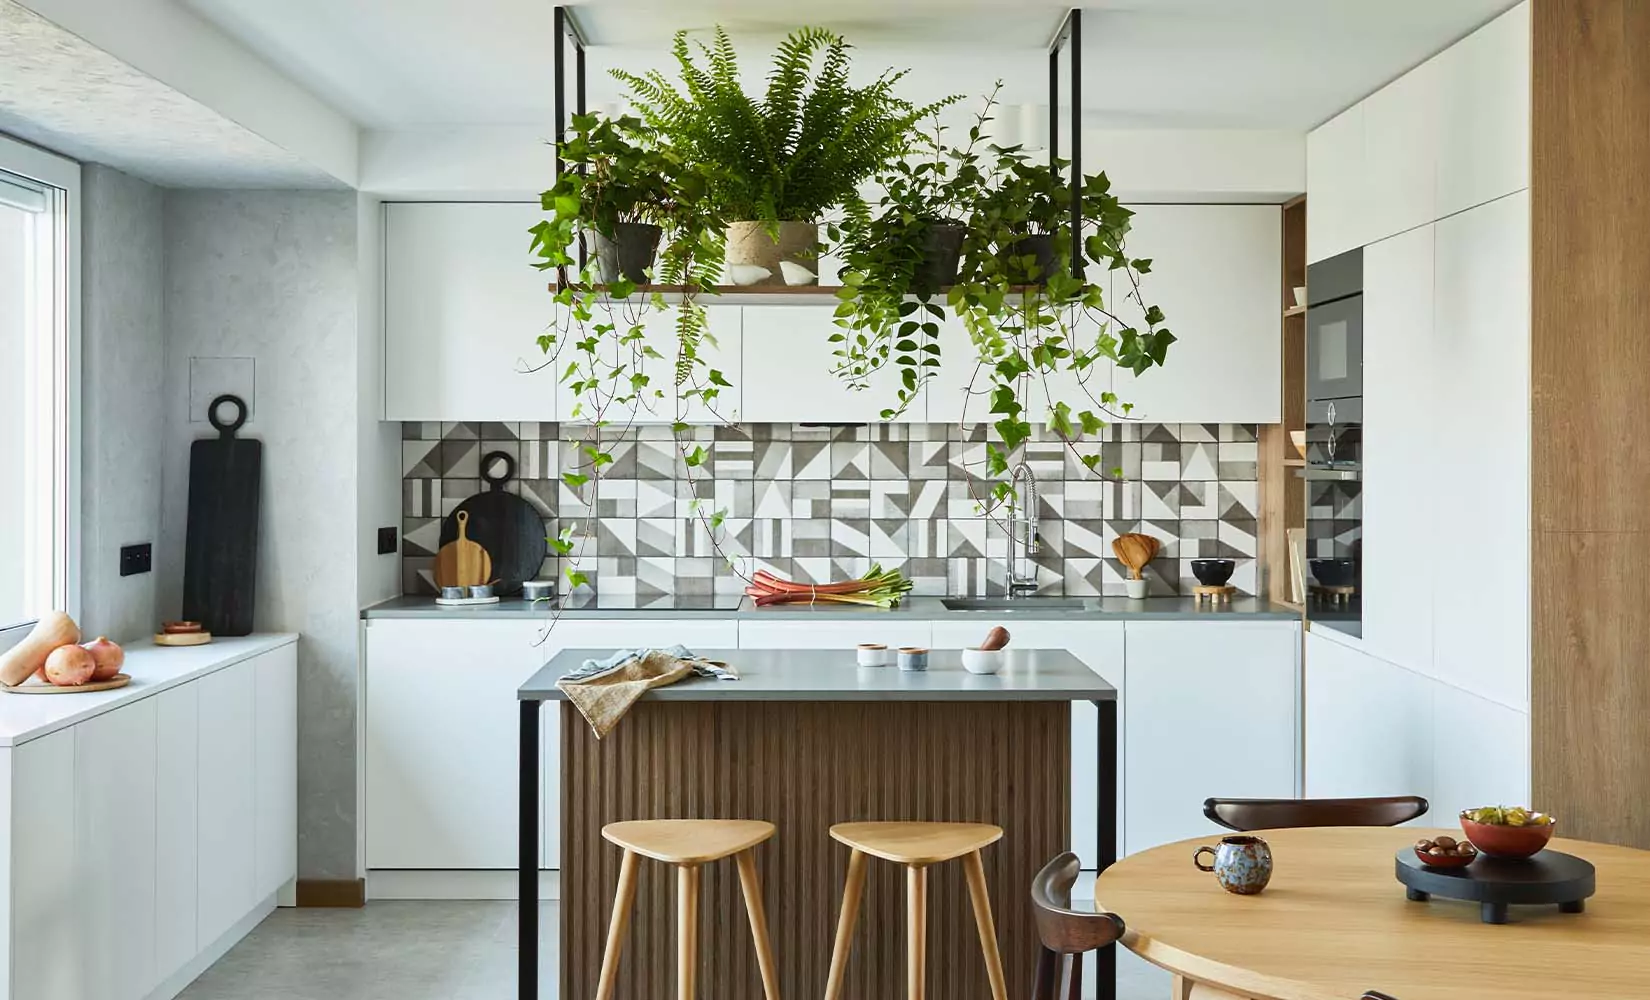 White kitchen with gray geometric backsplash and live plants.